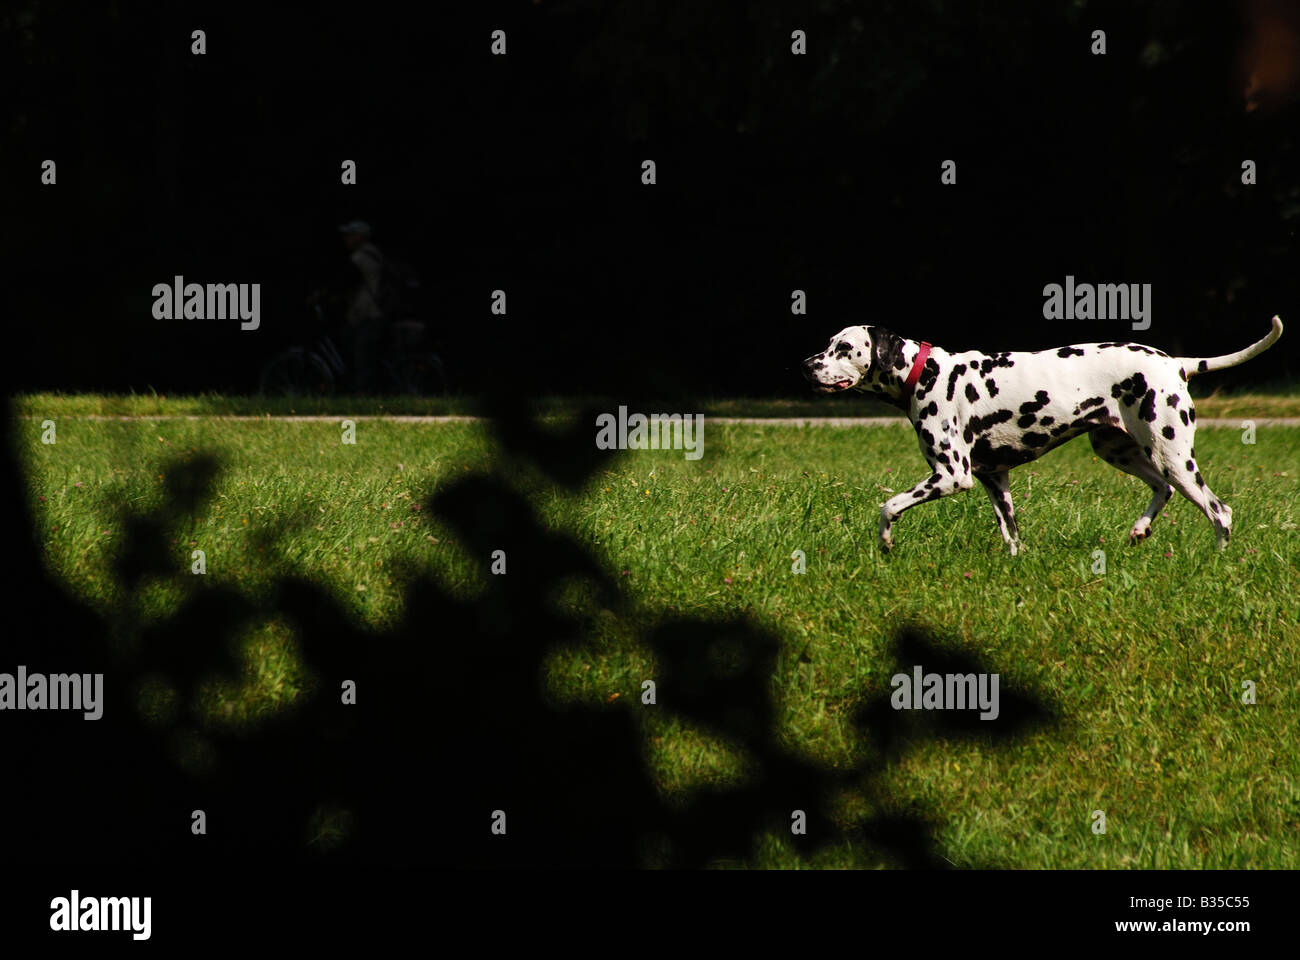 Dalmatian dog walking on grass Stock Photo